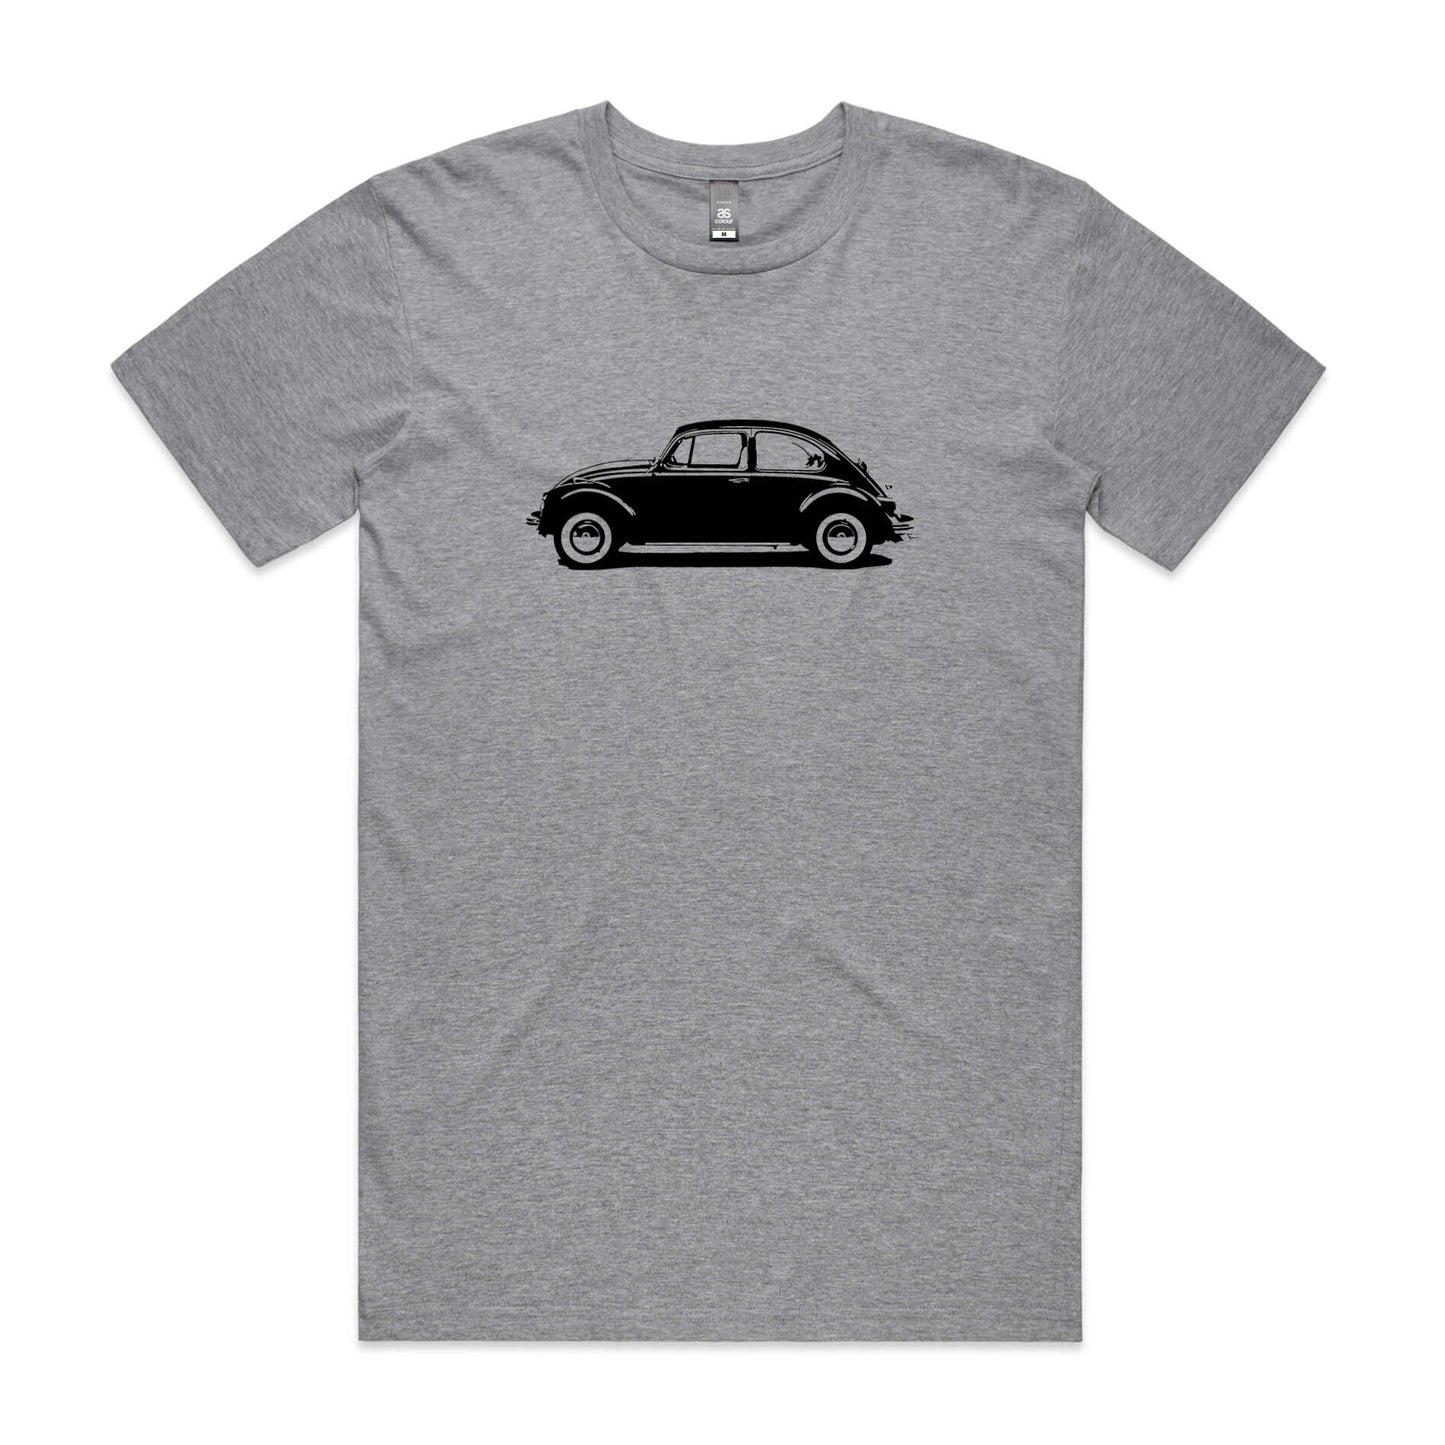 VW Beetle t-shirt in grey